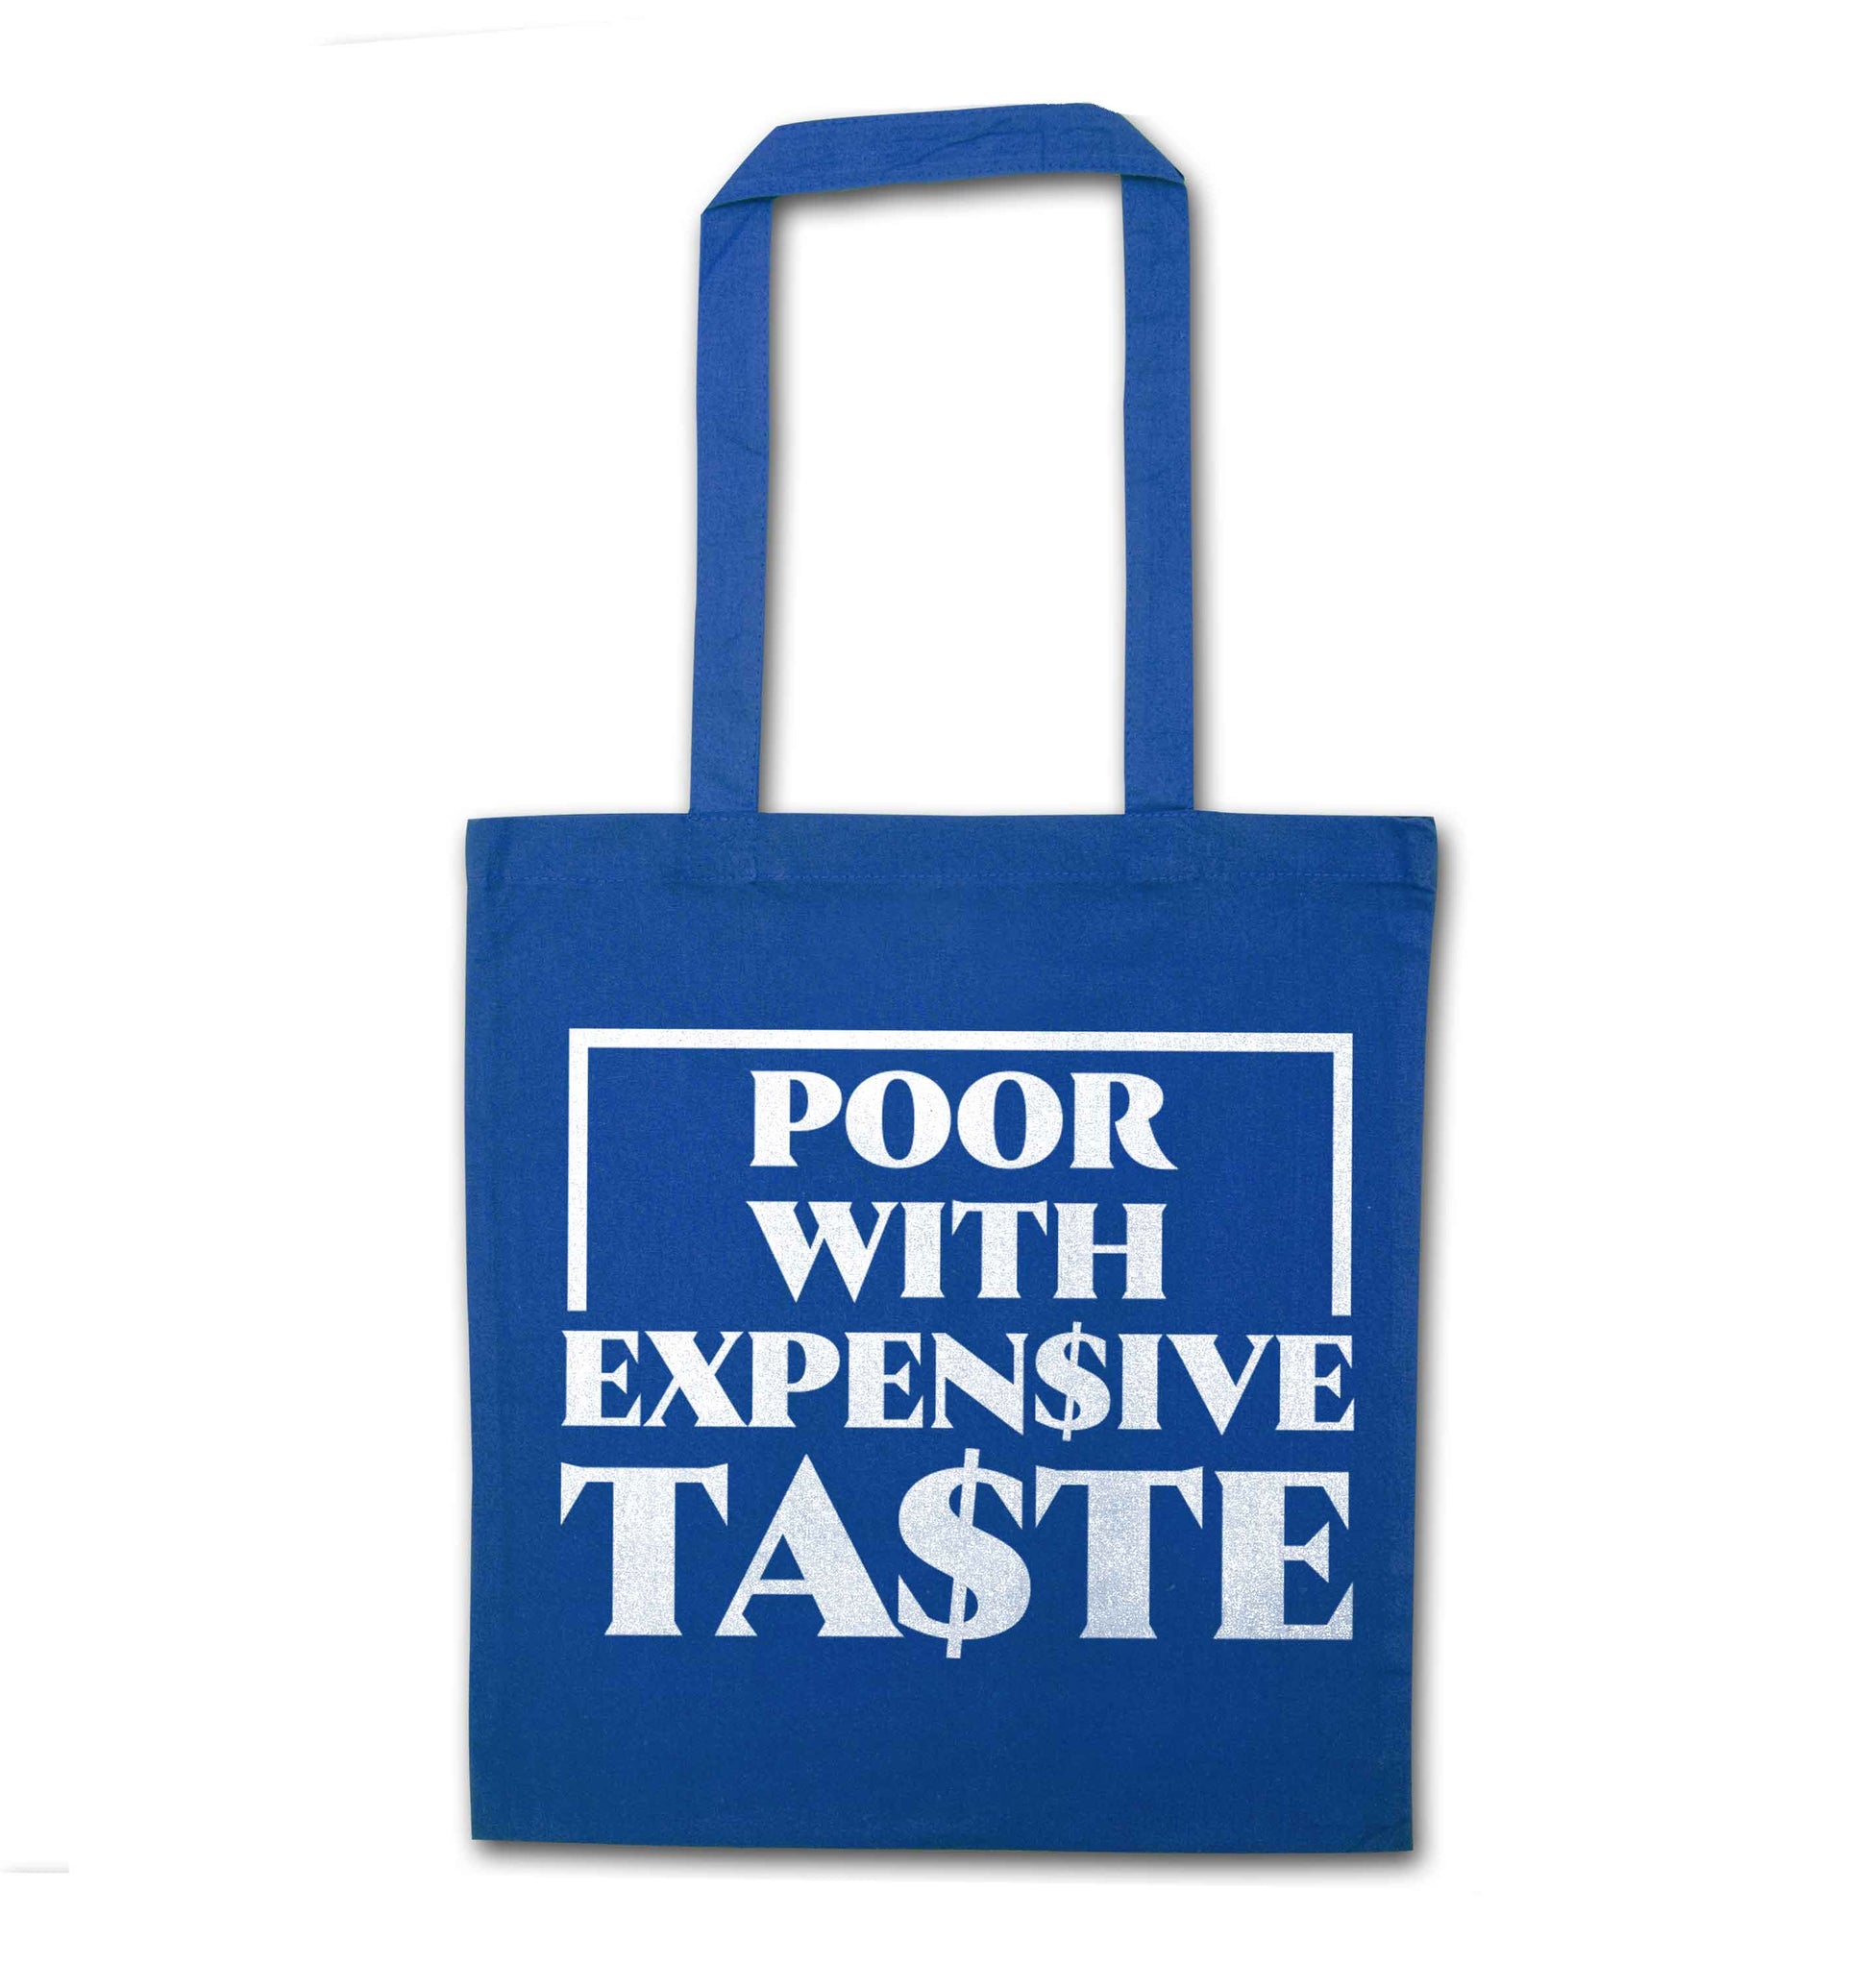 Poor with expensive taste blue tote bag